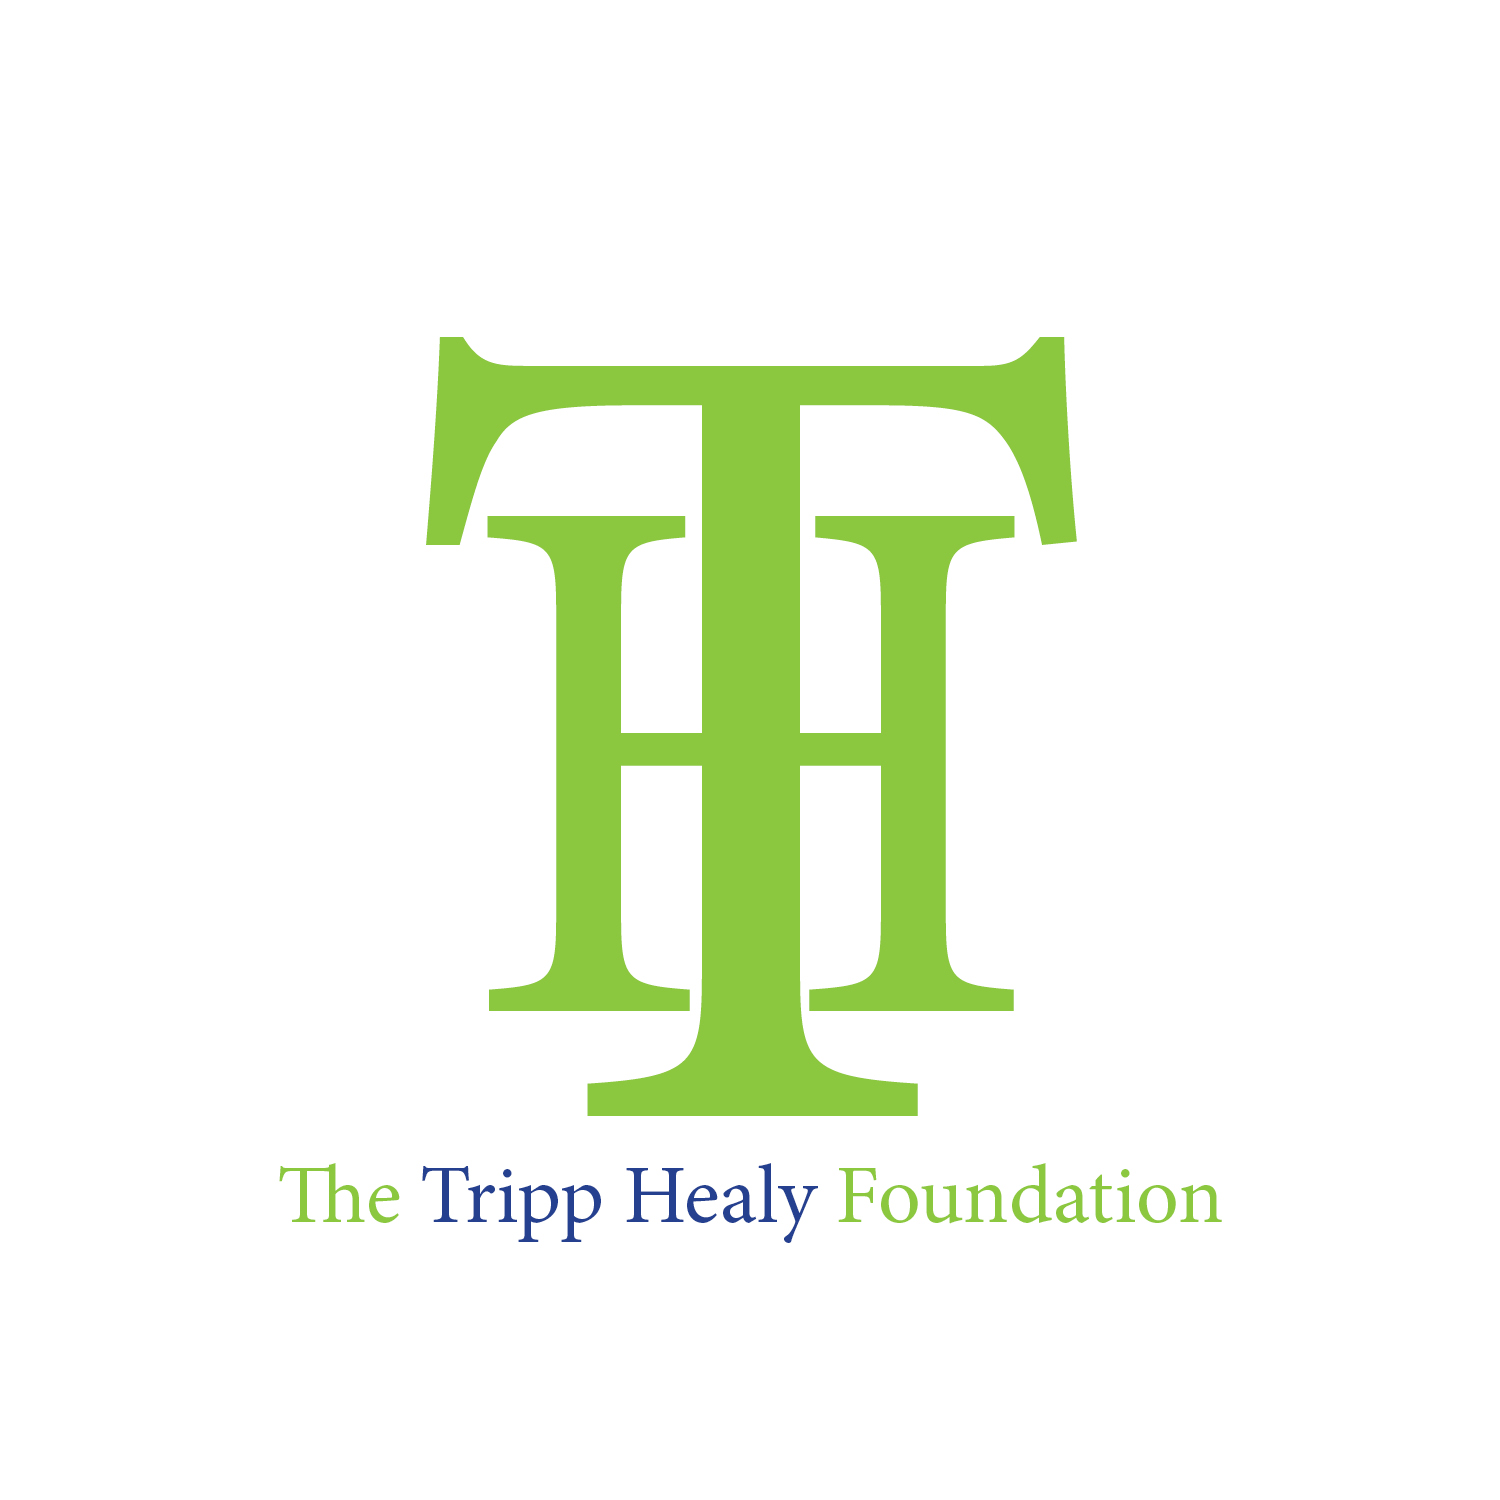 The Tripp Healy Foundation